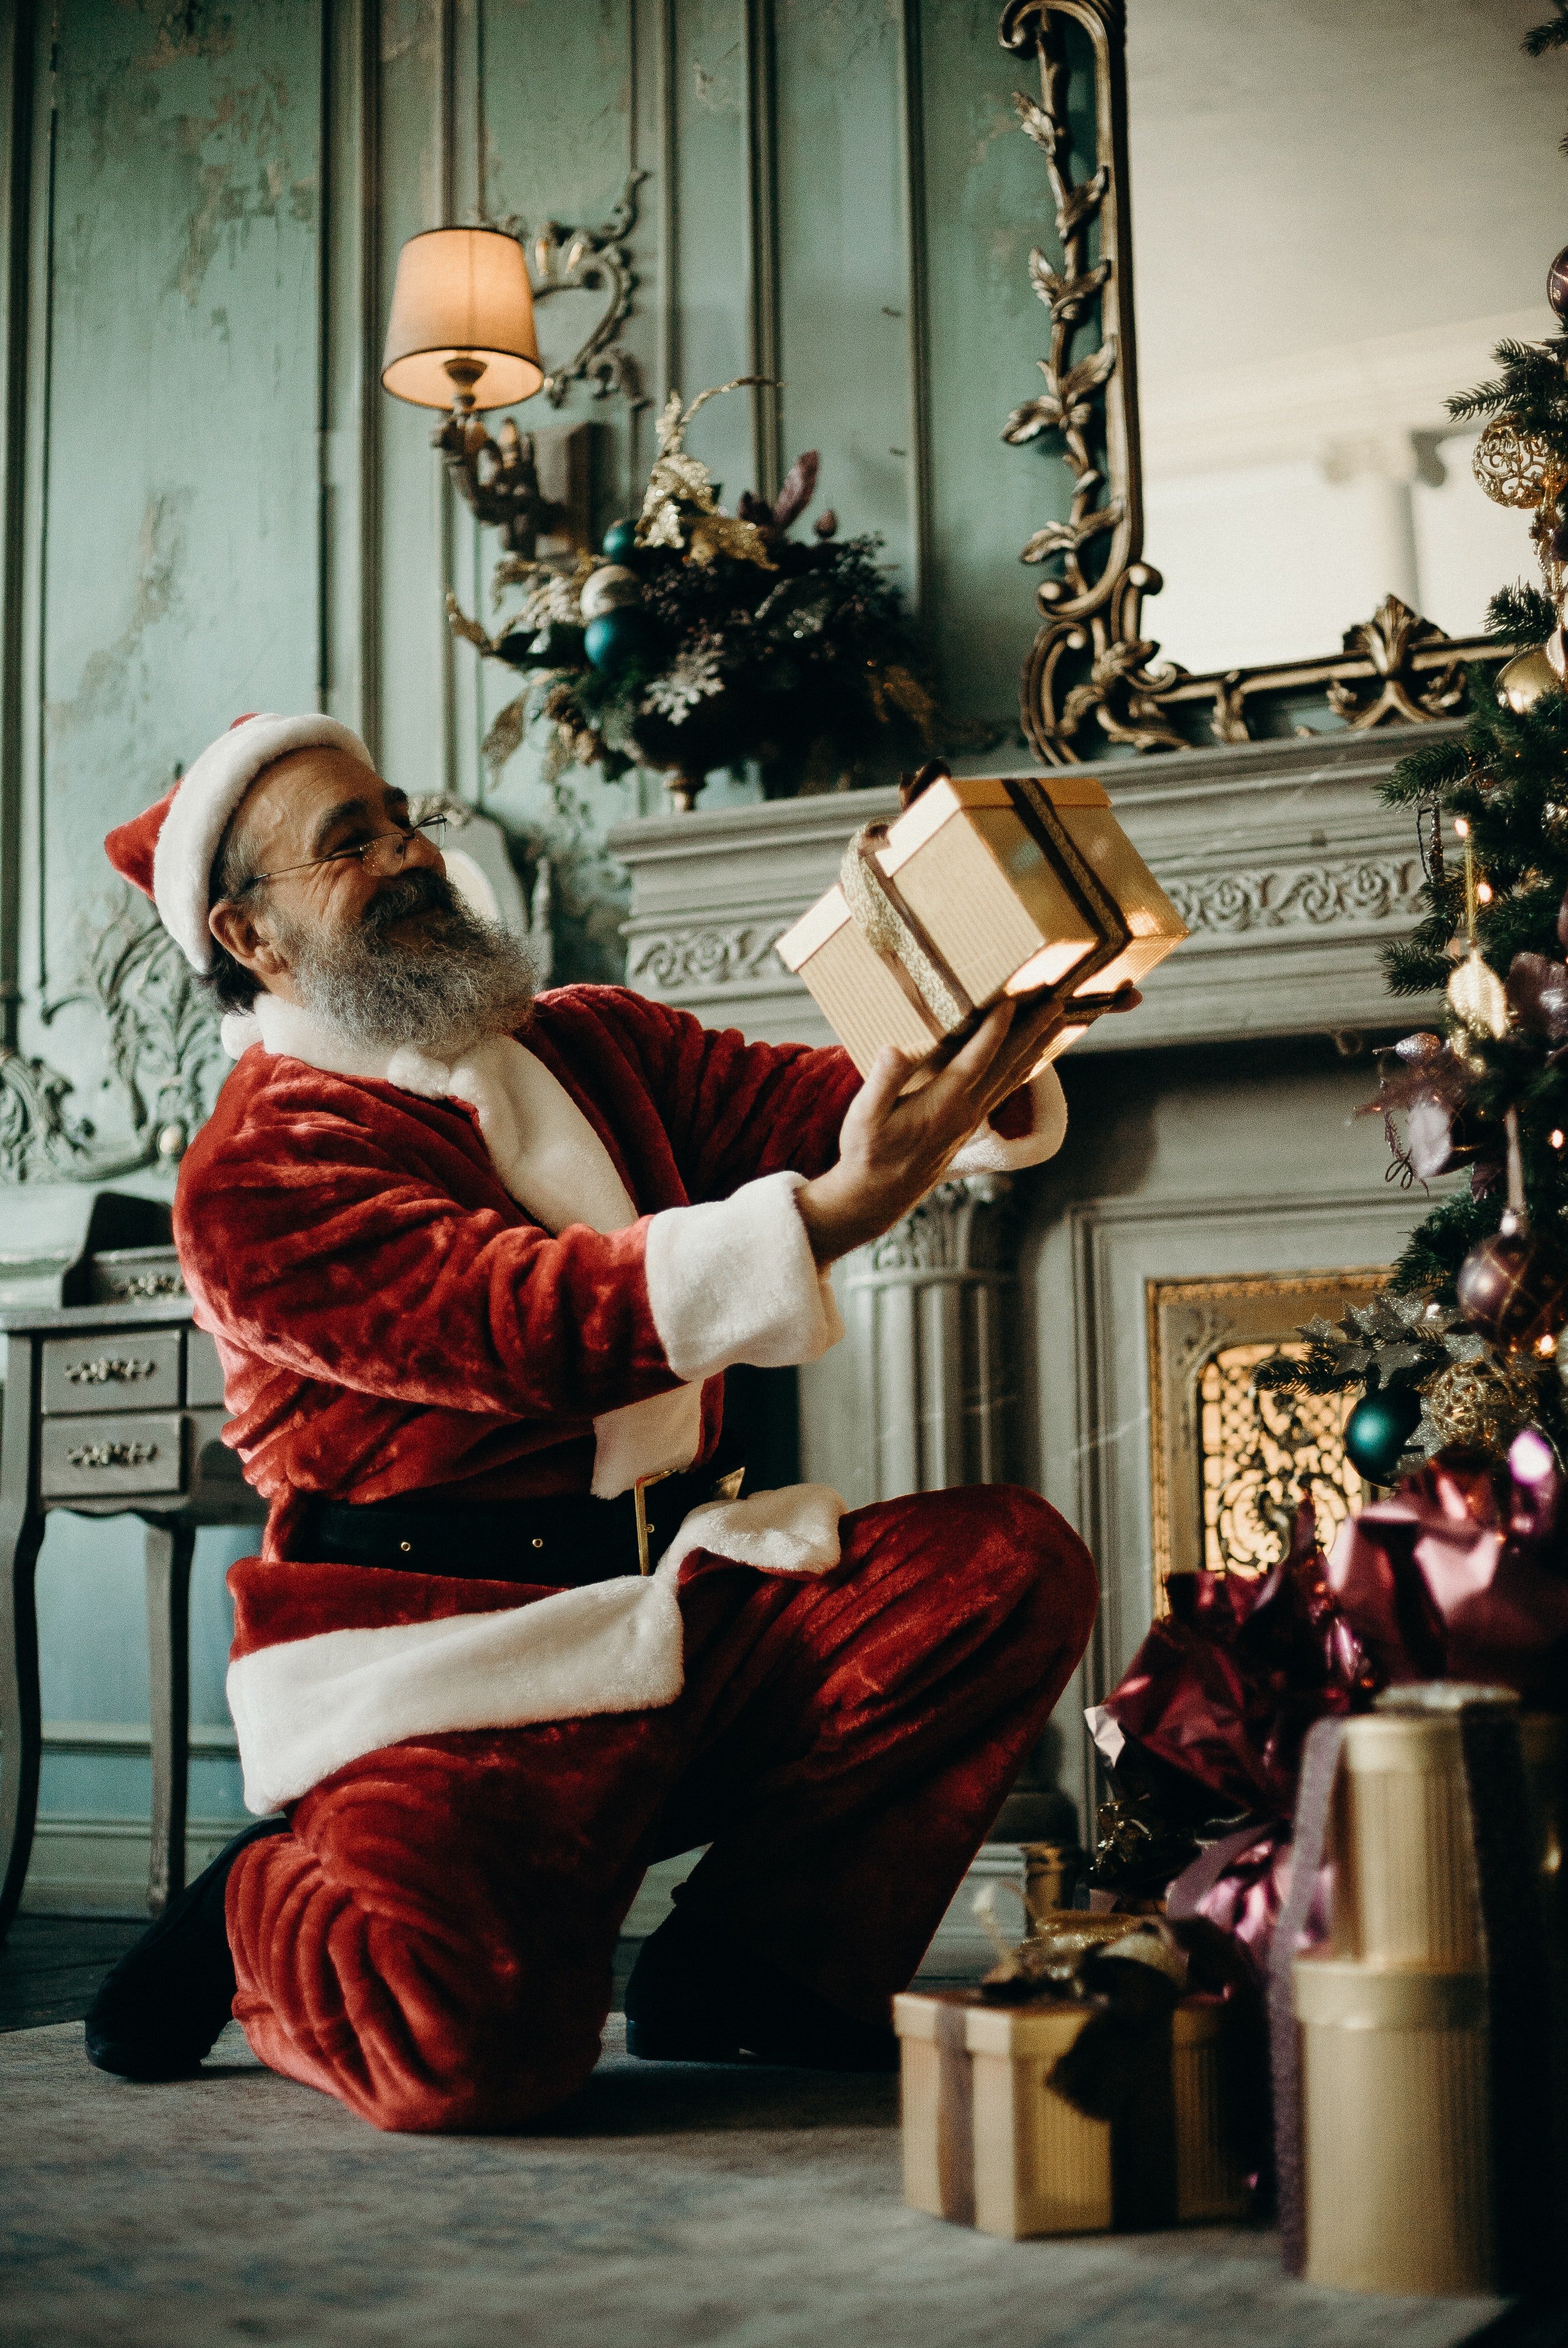 Mr. Macmillan dressed up as Santa and visited Sam and Beatrice | Photo: Pexels